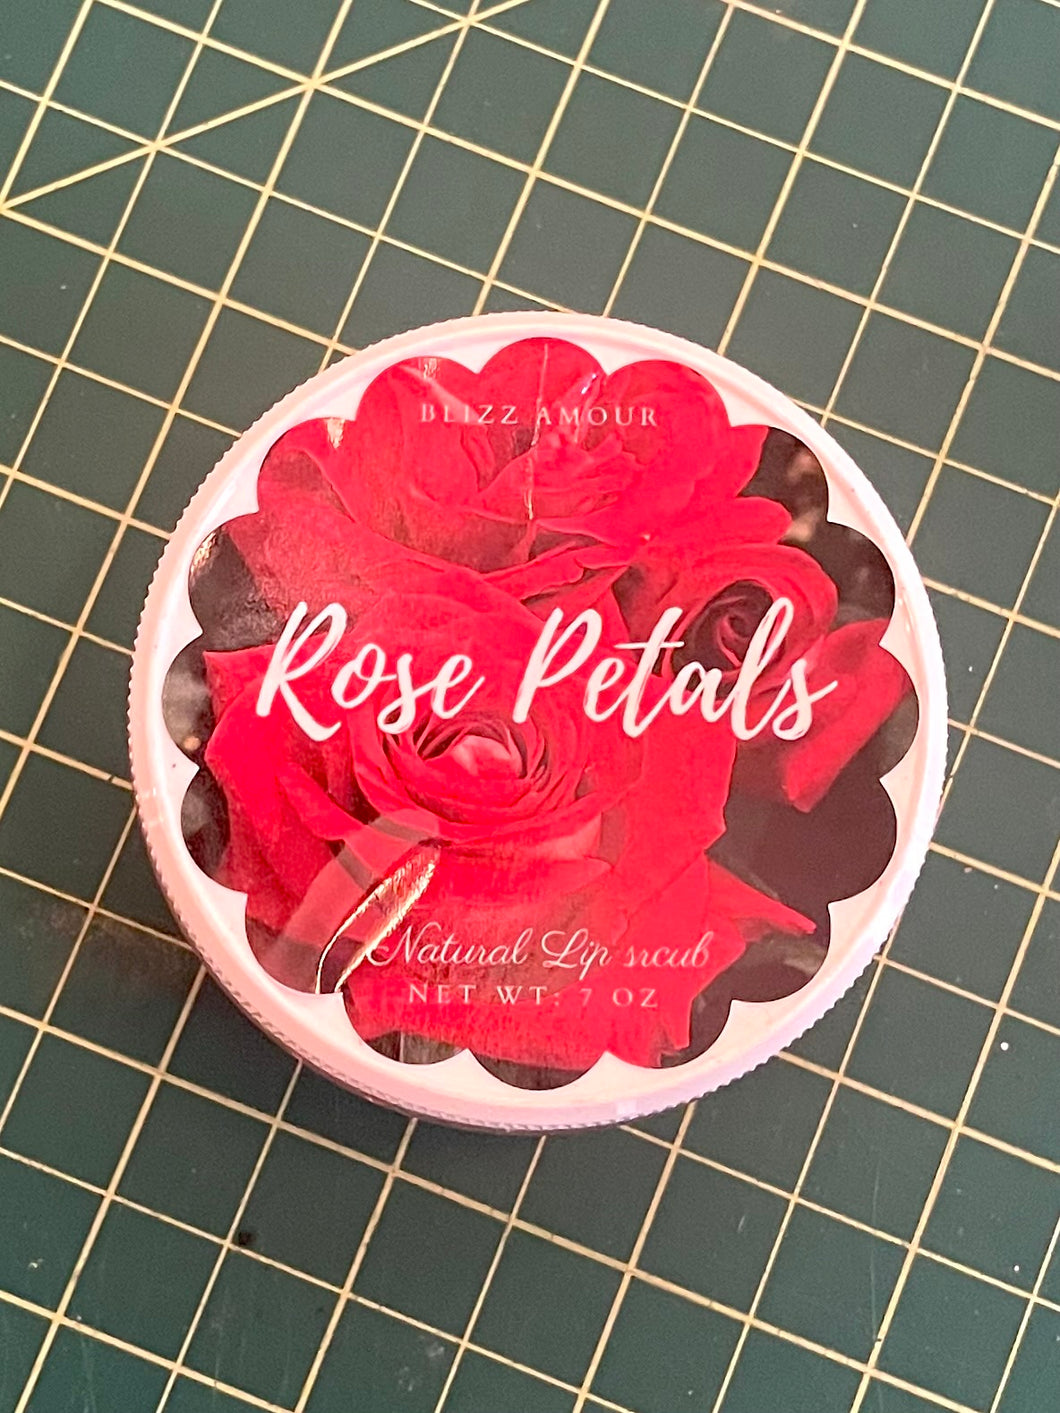 Rose Petal Lip Scrub - Blizz Amour